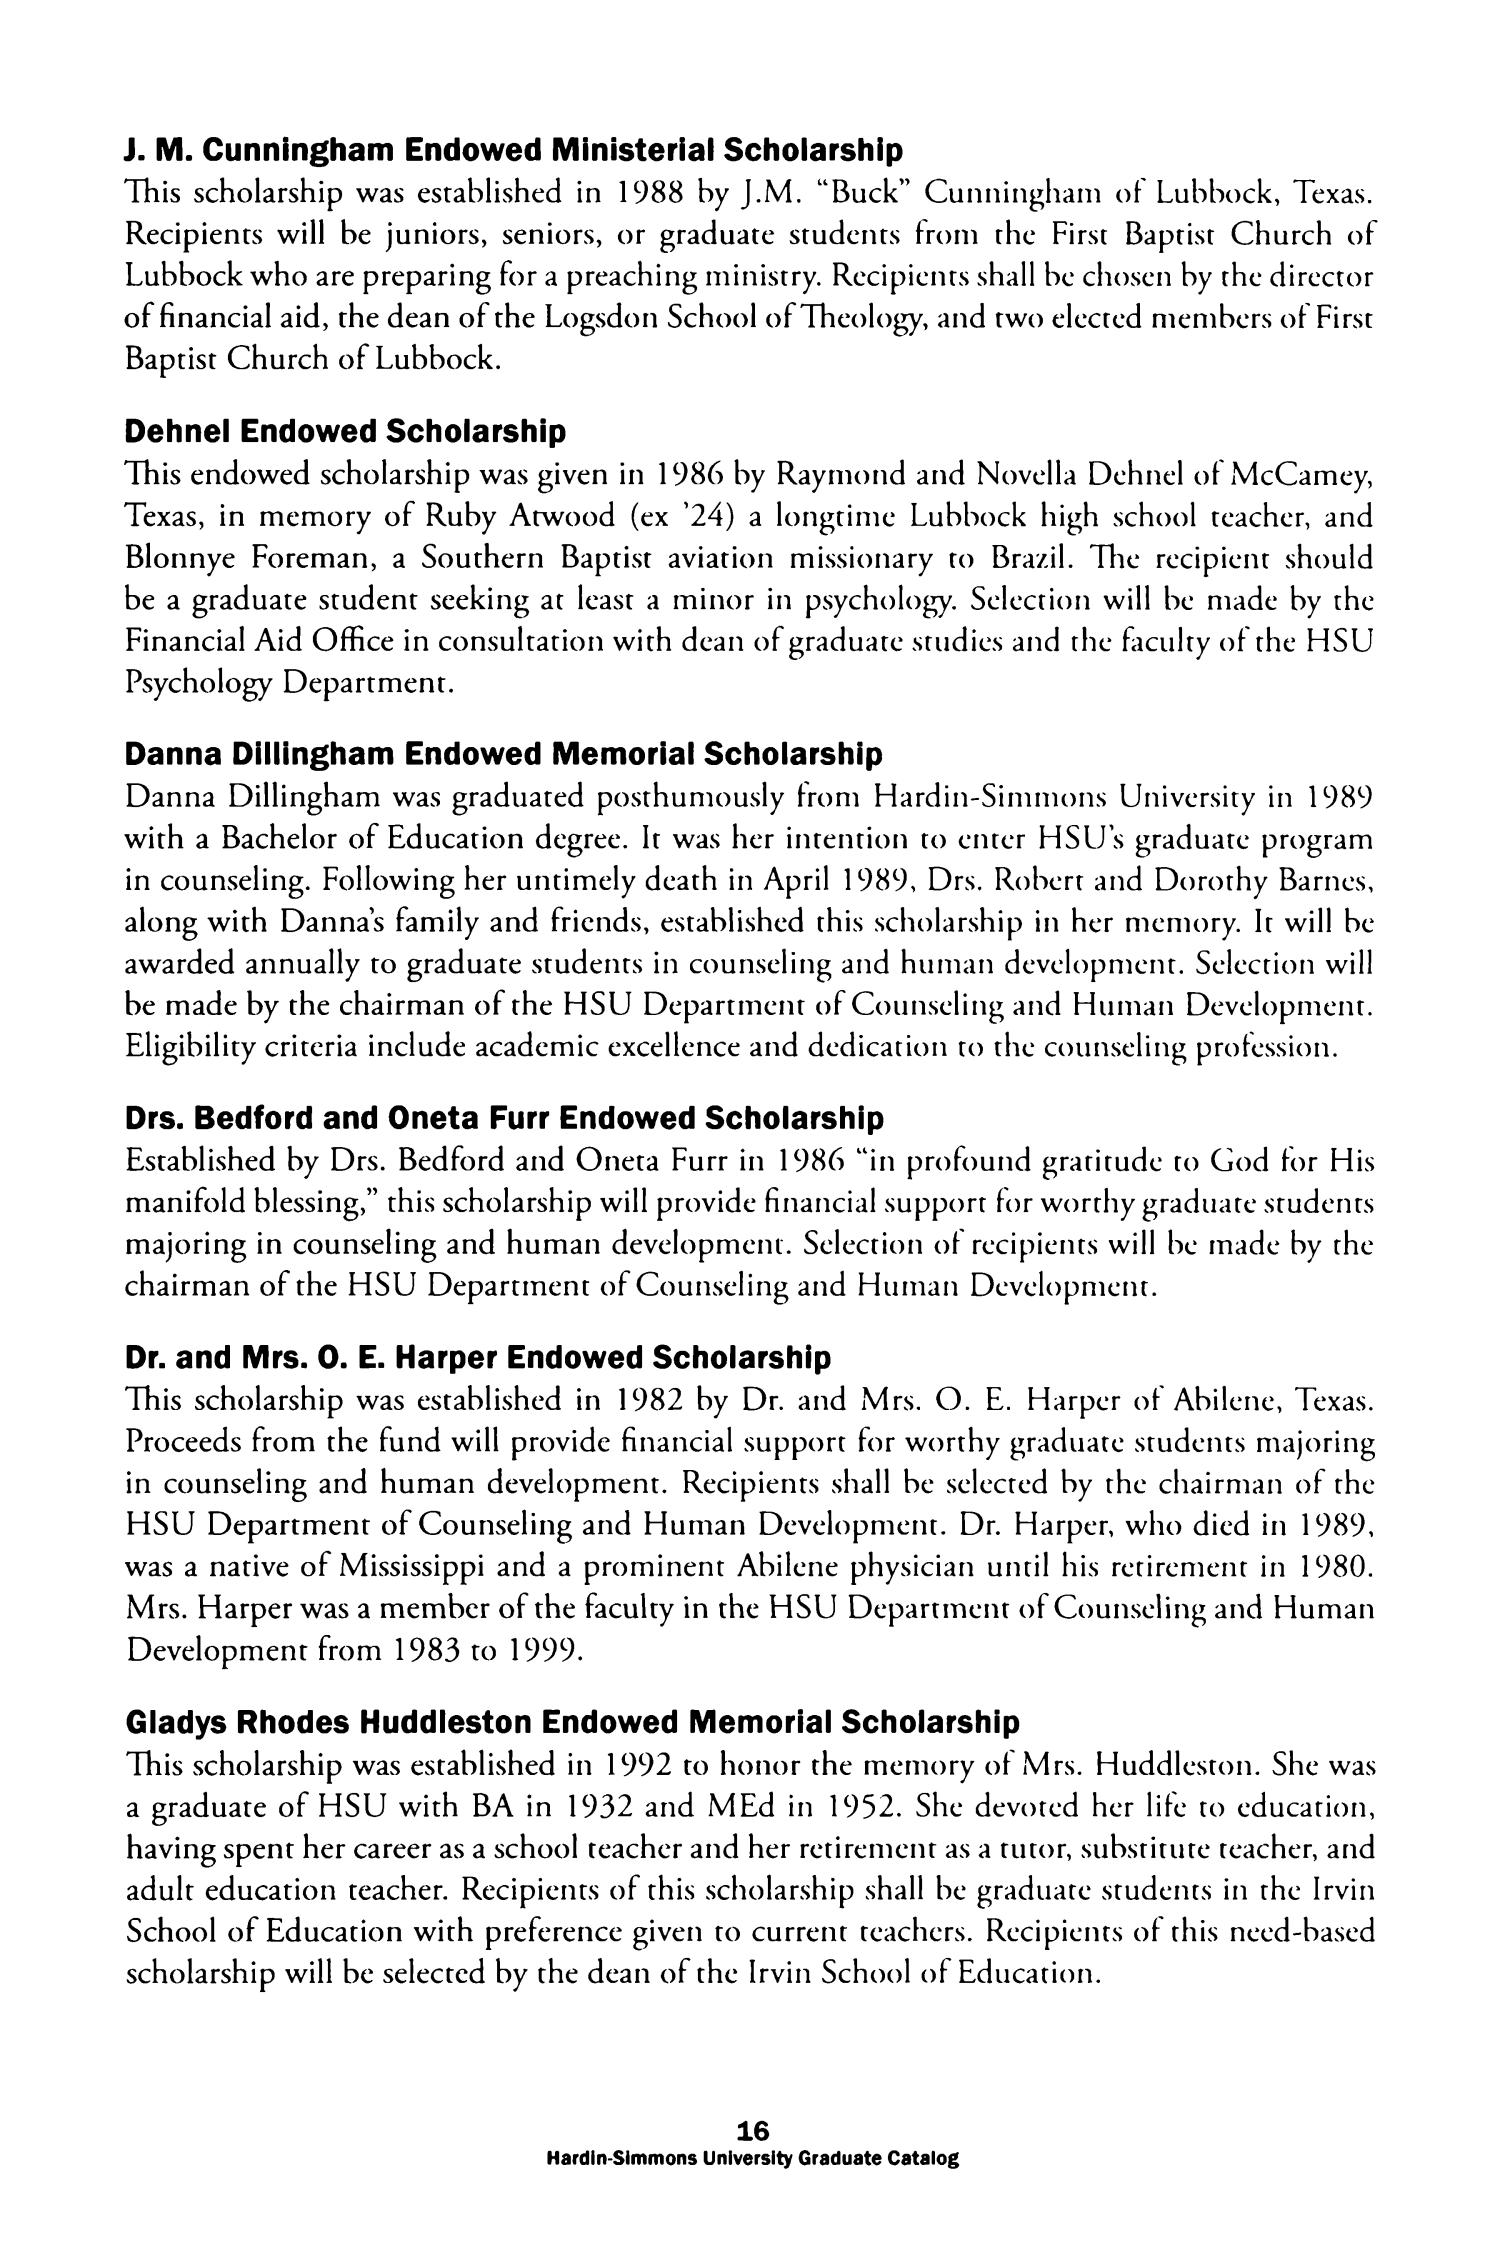 Catalog of Hardin-Simmons University, 2009-2010 Graduate Bulletin
                                                
                                                    16
                                                